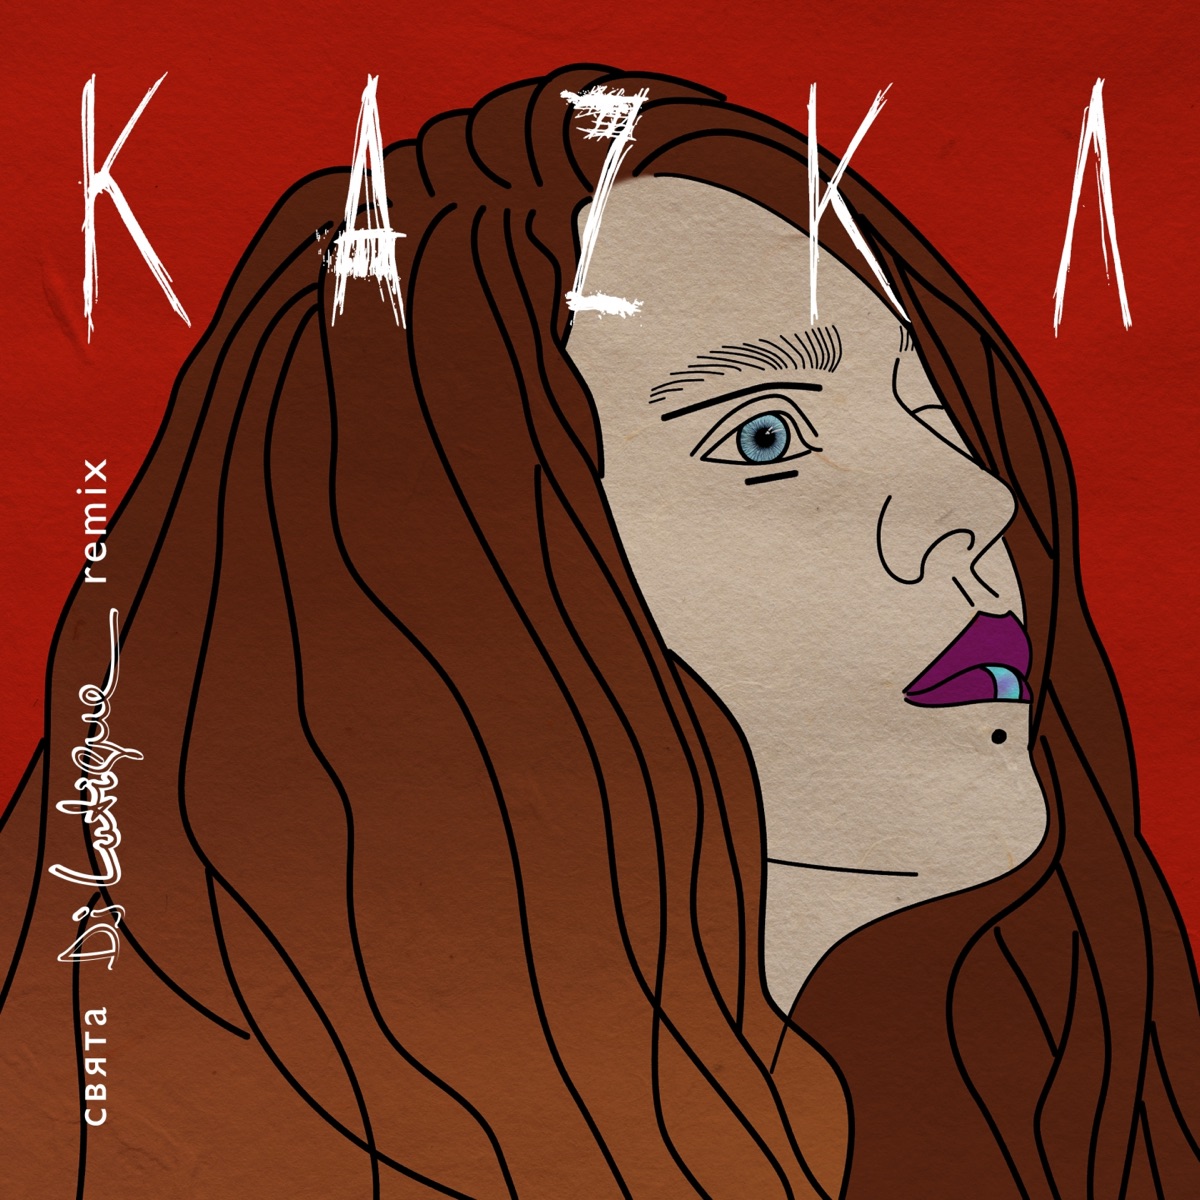 Свята (DJ Lutique Extended Remix) - Single - Album by KAZKA - Apple Music